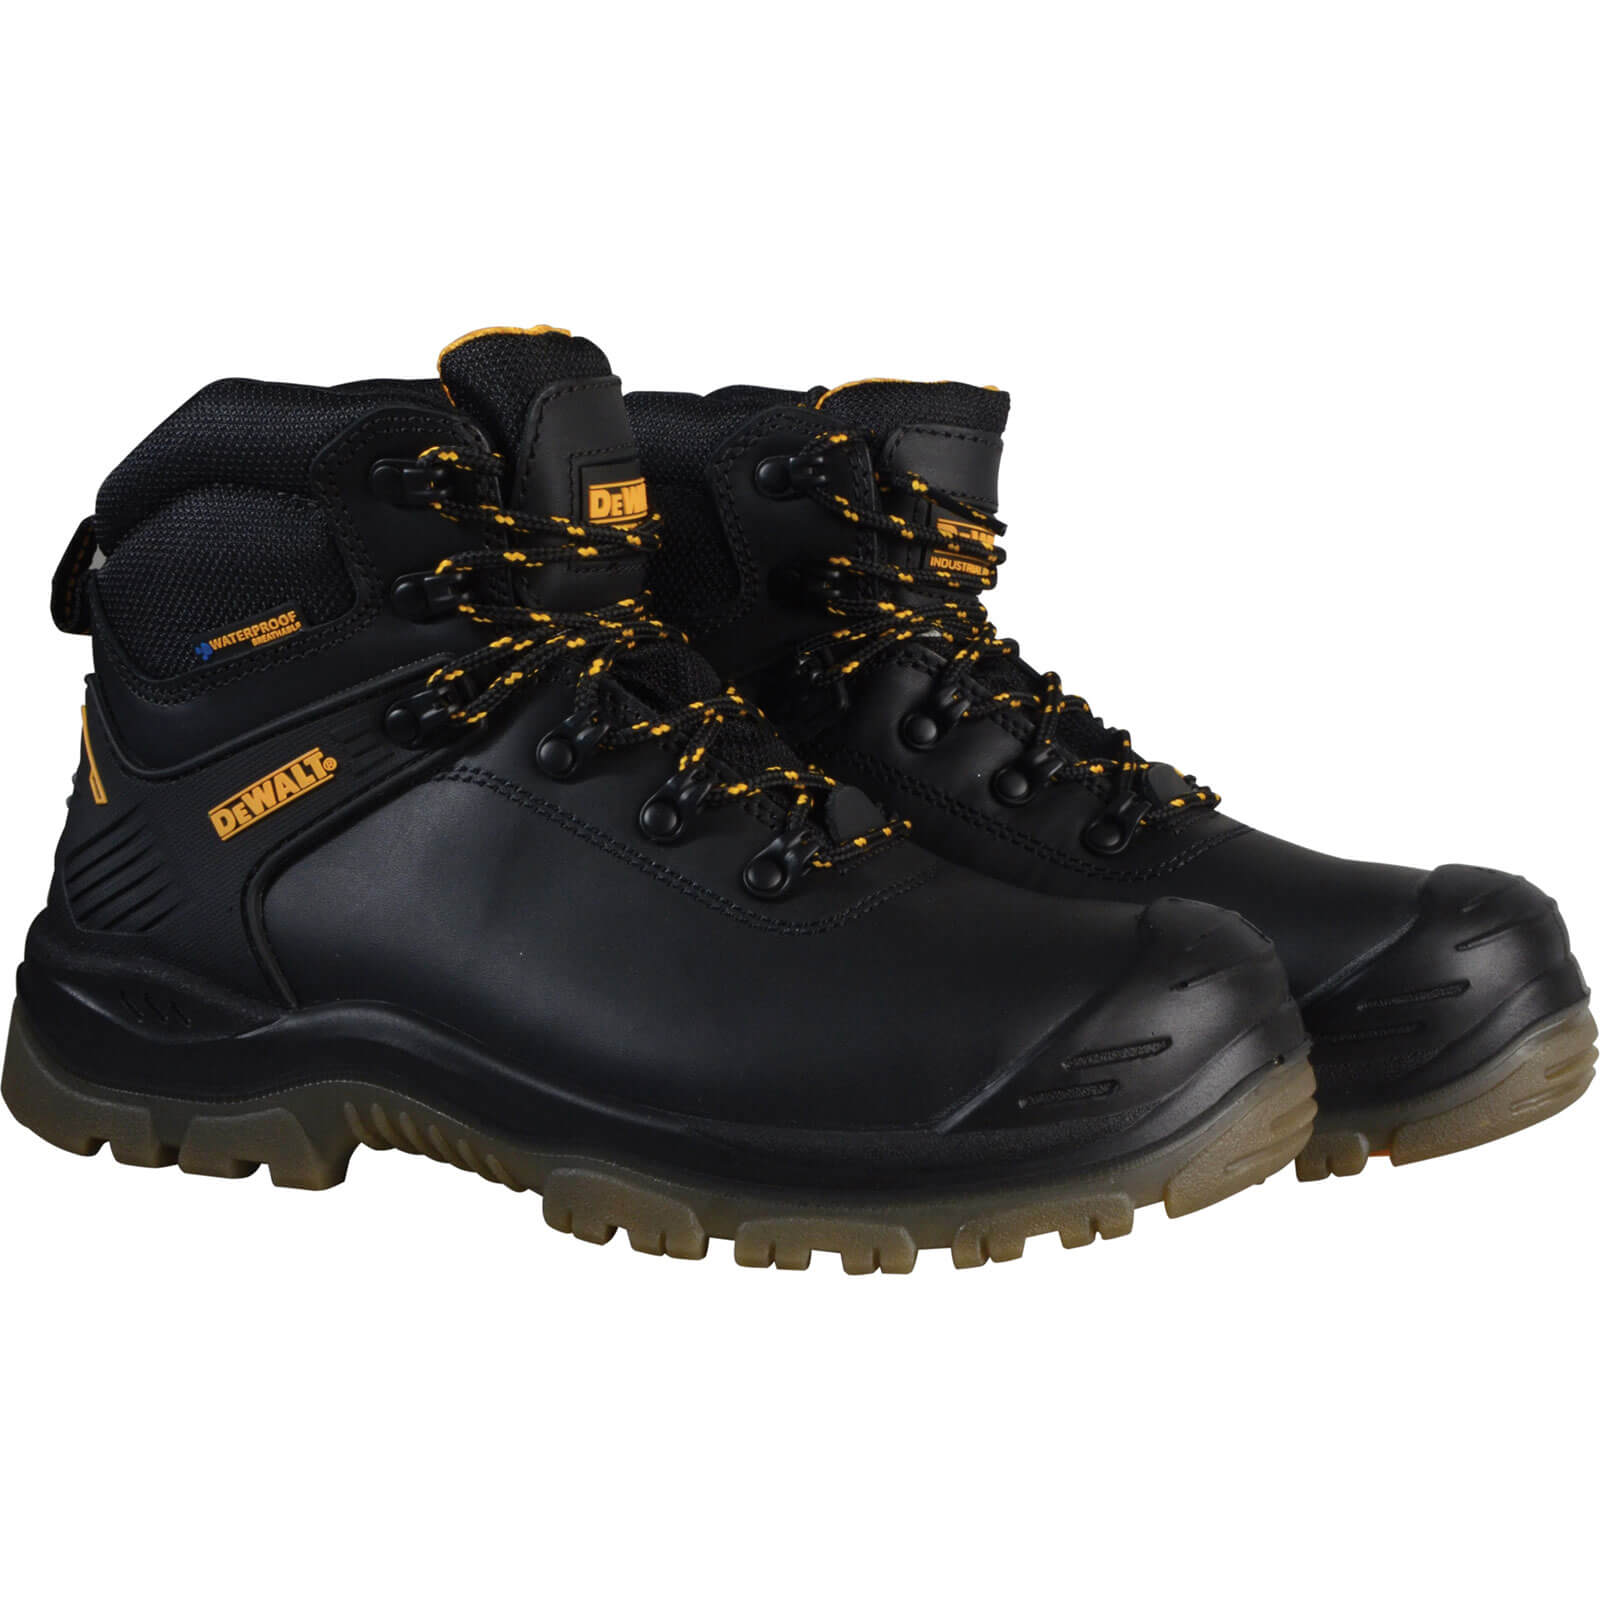 DeWalt Newark Waterproof Safety Hiker Boots Black Size 10